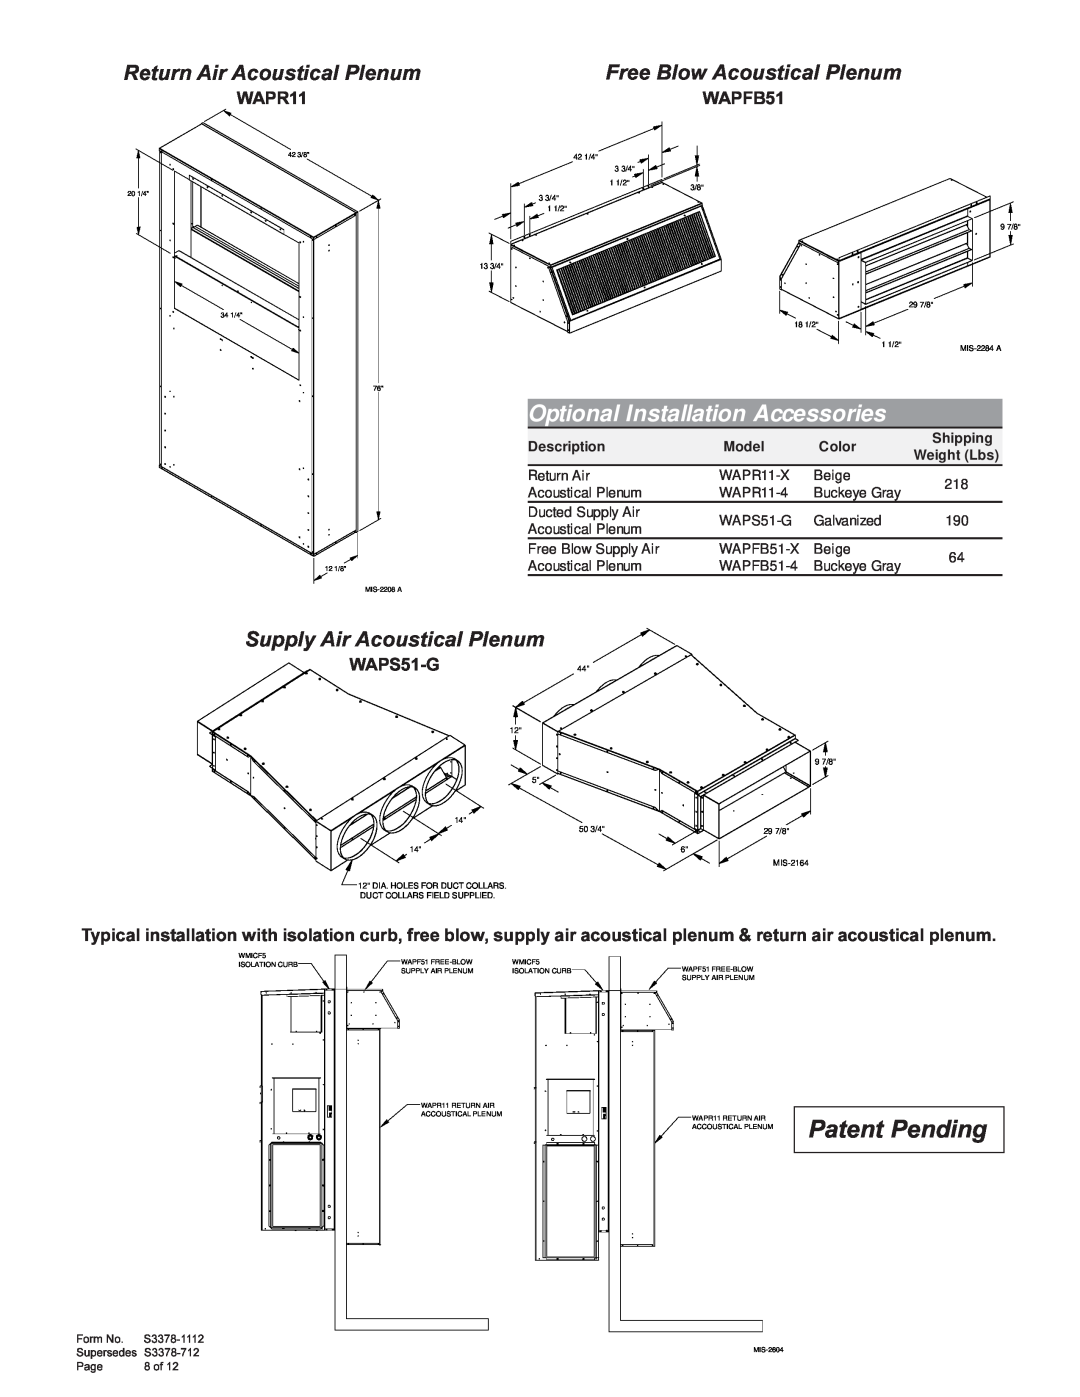 Bard WL3S Patent Pending, Return Air Acoustical Plenum, Free Blow Acoustical Plenum, Supply Air Acoustical Plenum, WAPFB51 